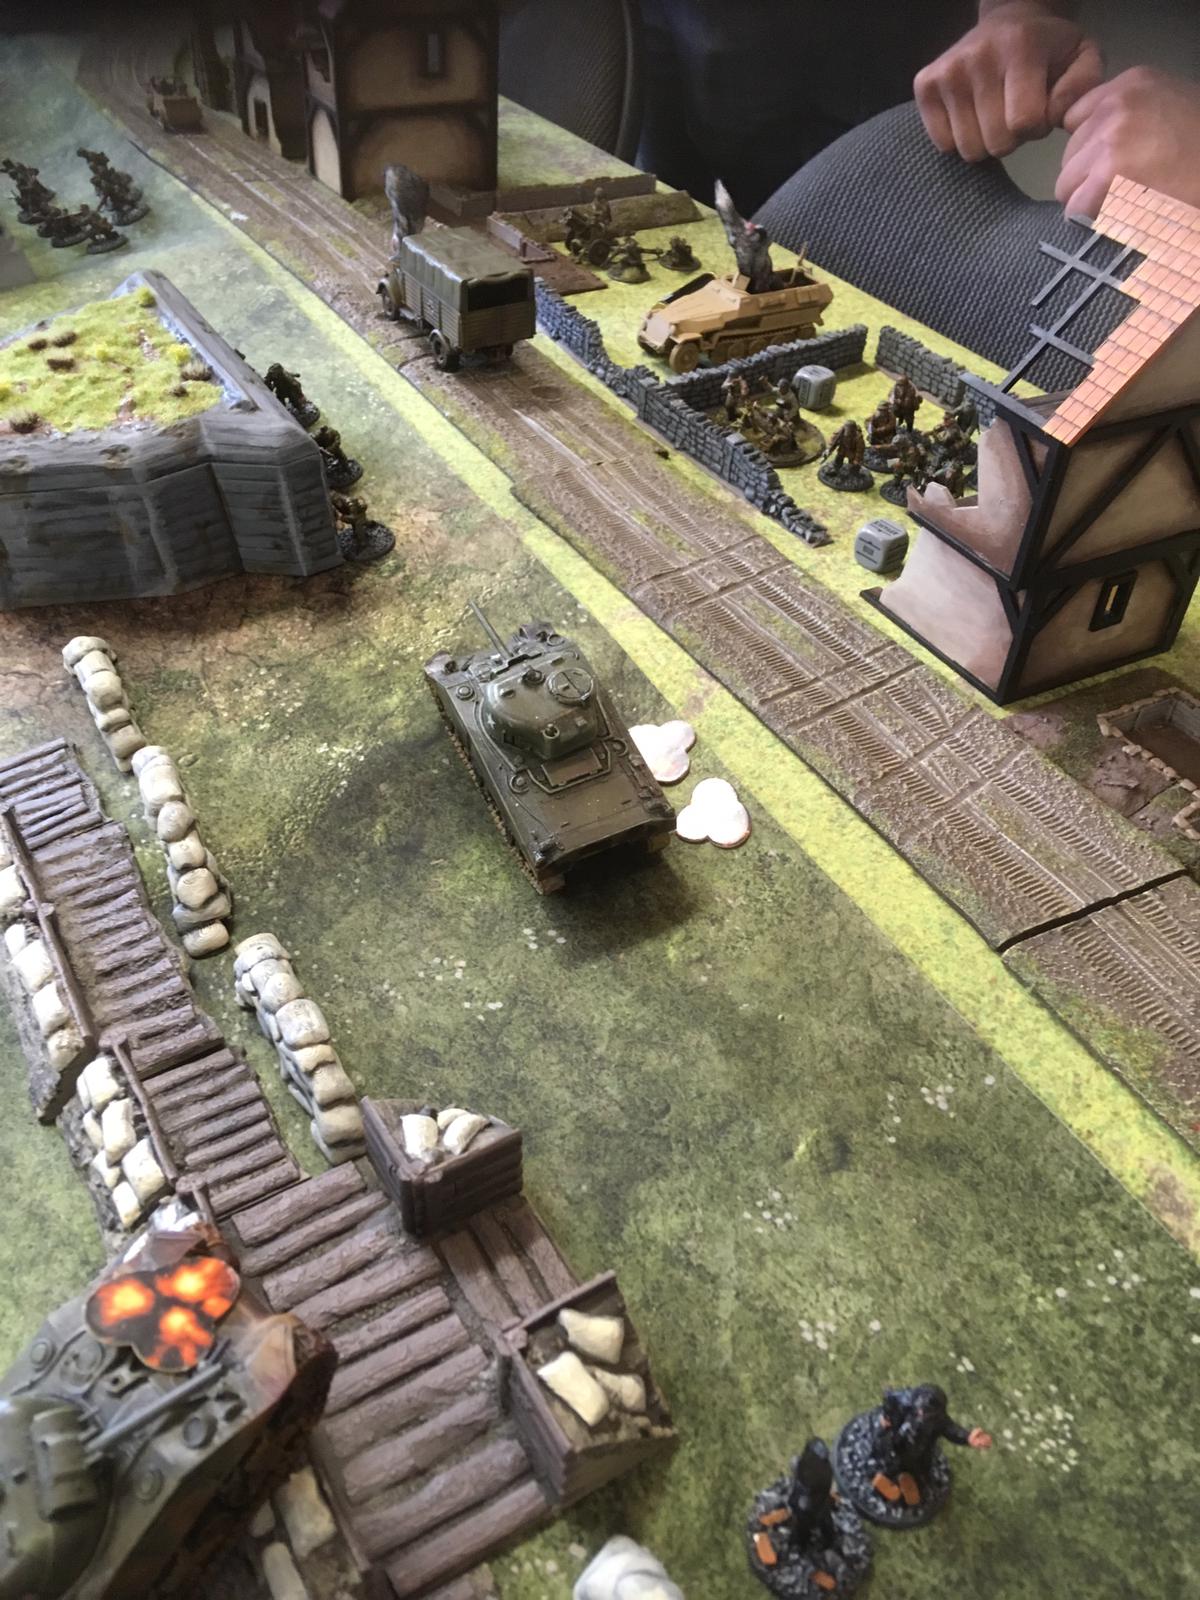 3FJD versus USA in a fierce infantry engagement